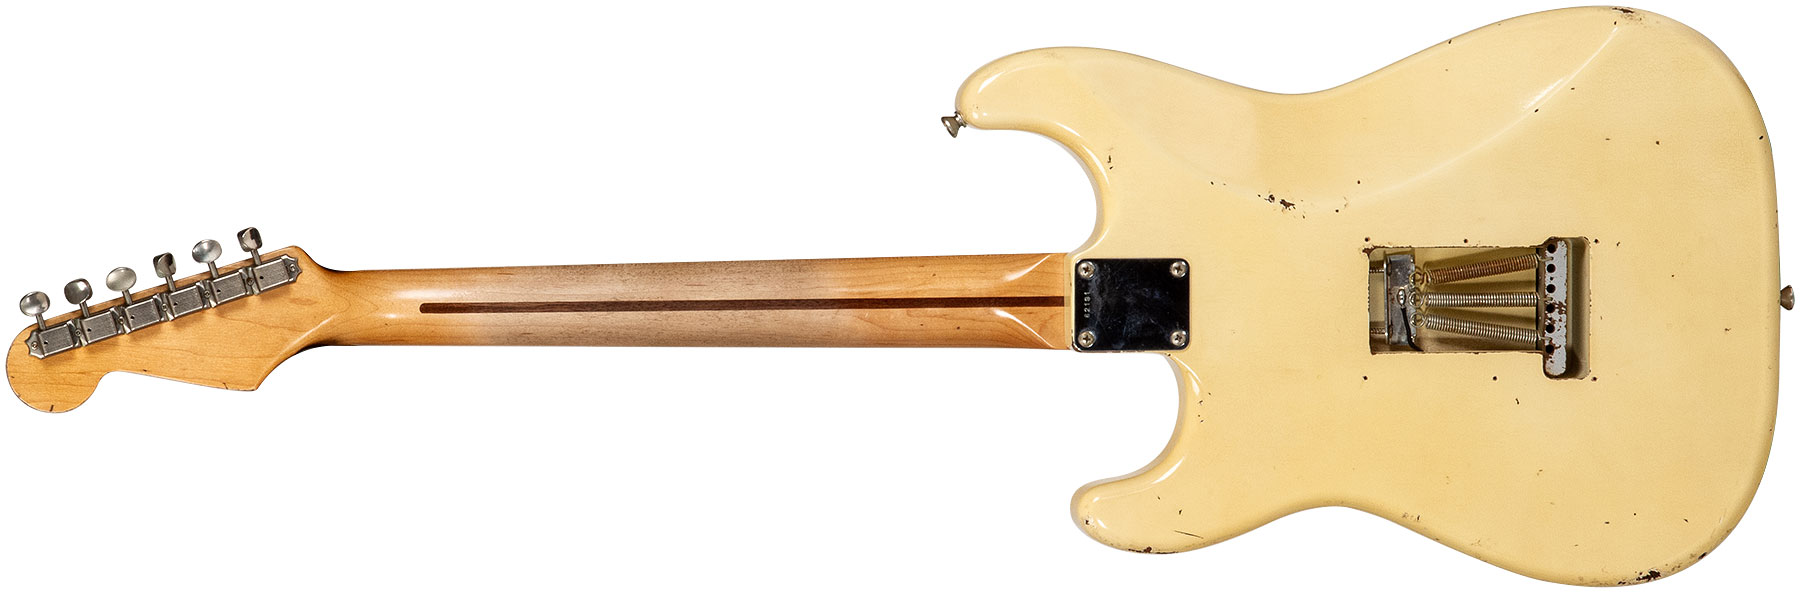 Rebelrelic S-series 55 3s Trem Mn #62191 - Light Aged Banana - Elektrische gitaar in Str-vorm - Variation 1